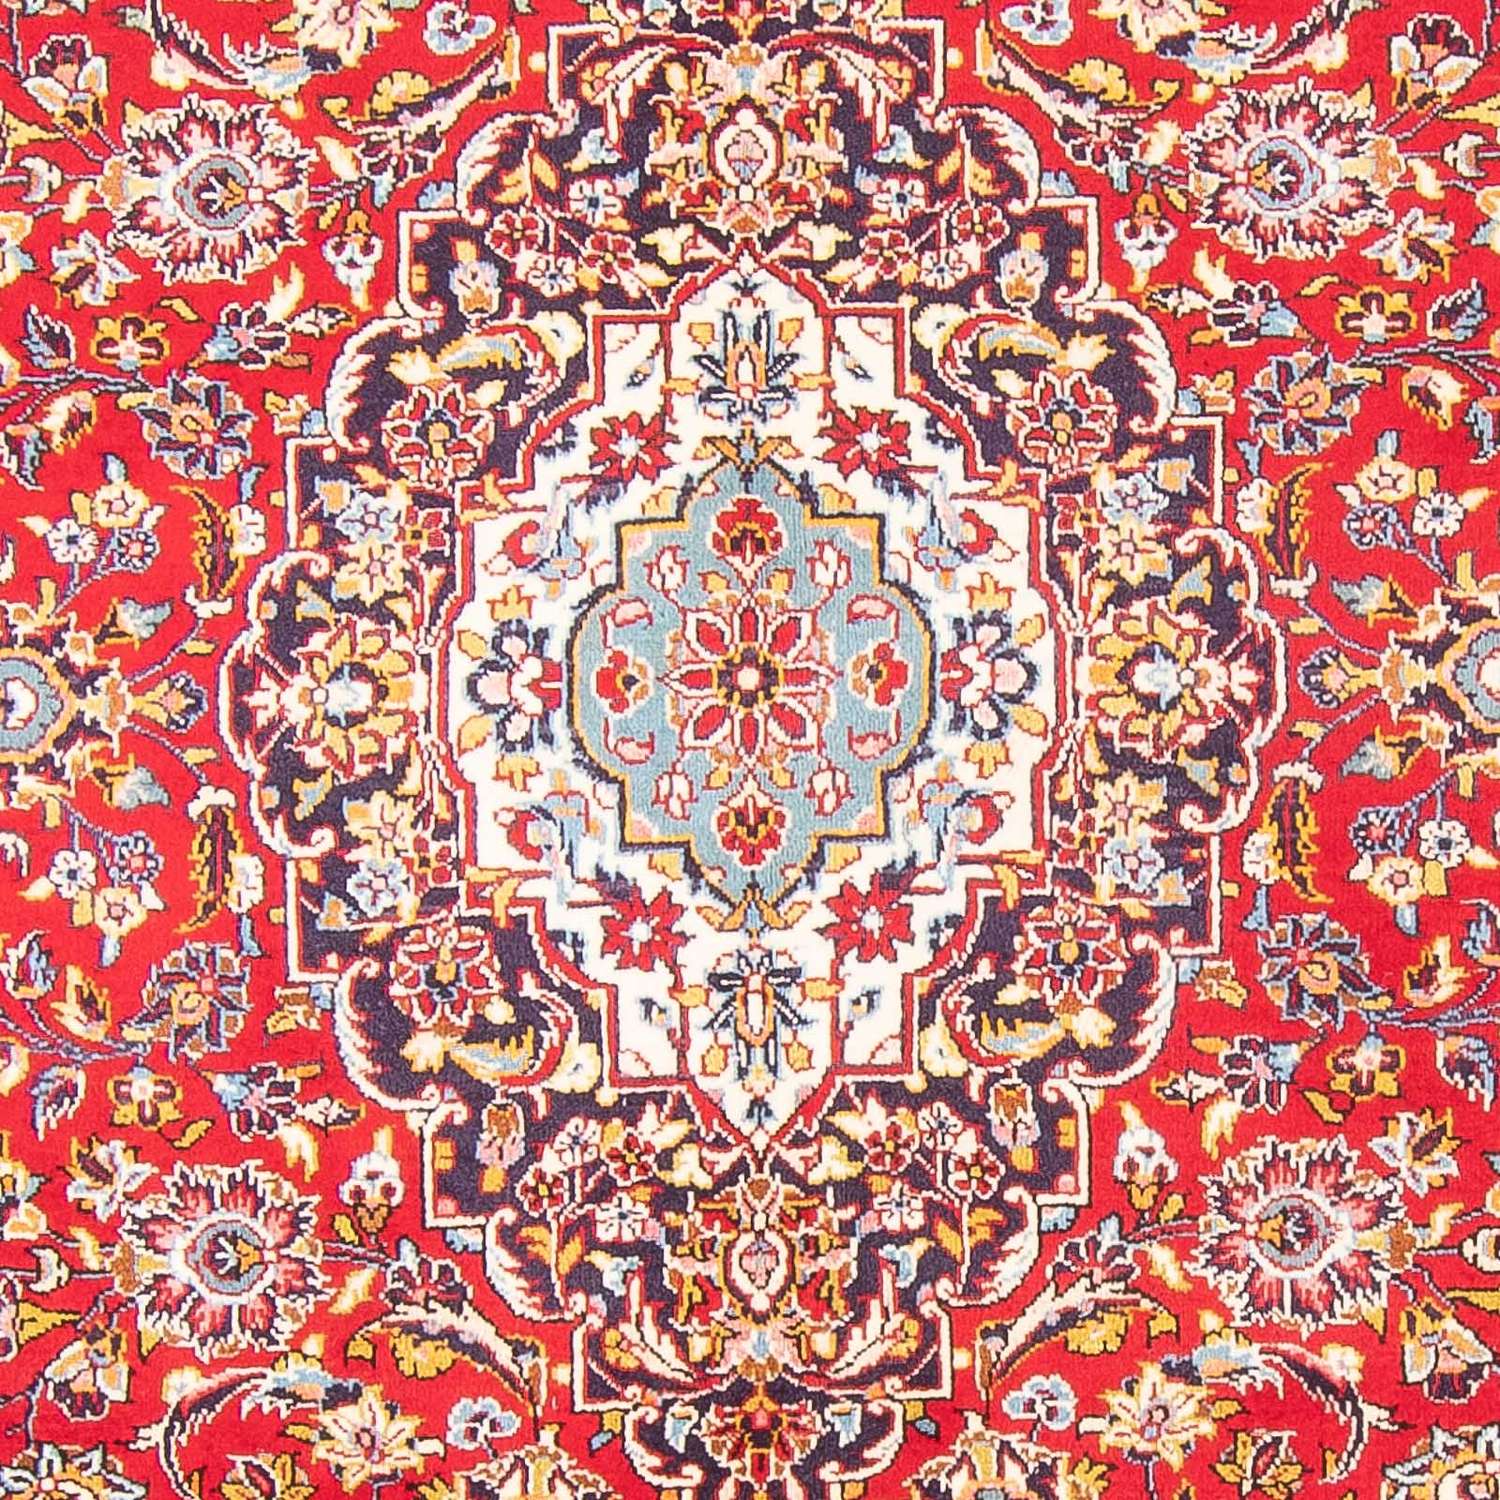 Persisk tæppe - Keshan - 290 x 195 cm - rød